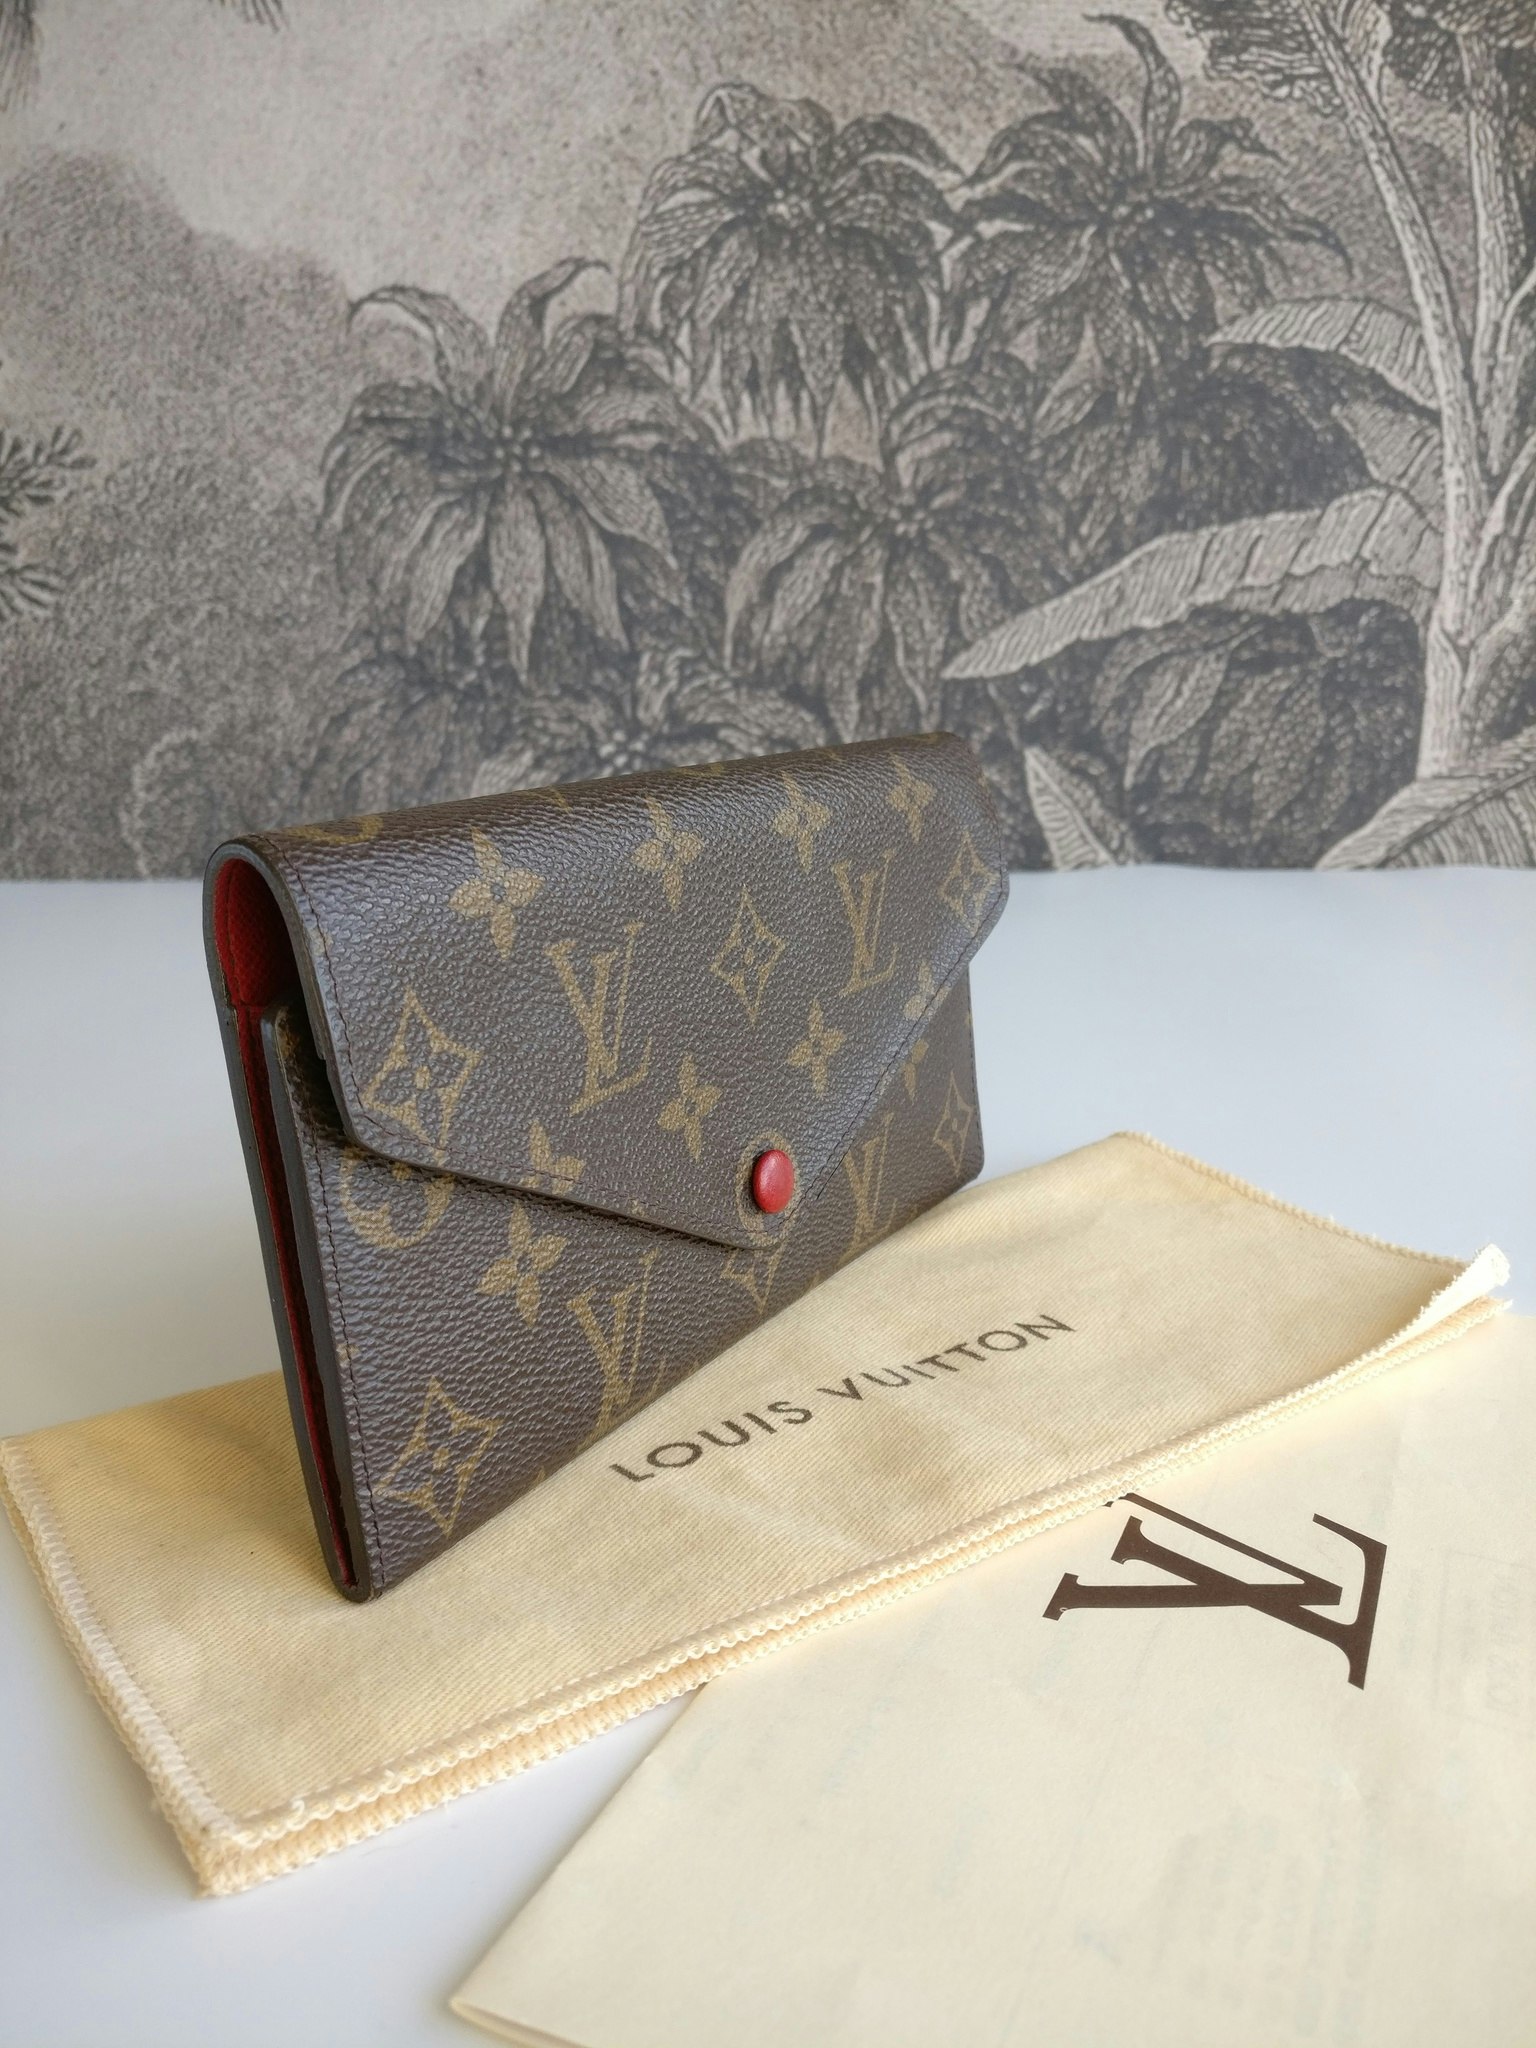 Louis Vuitton Josephine Wallet - Good or Bag